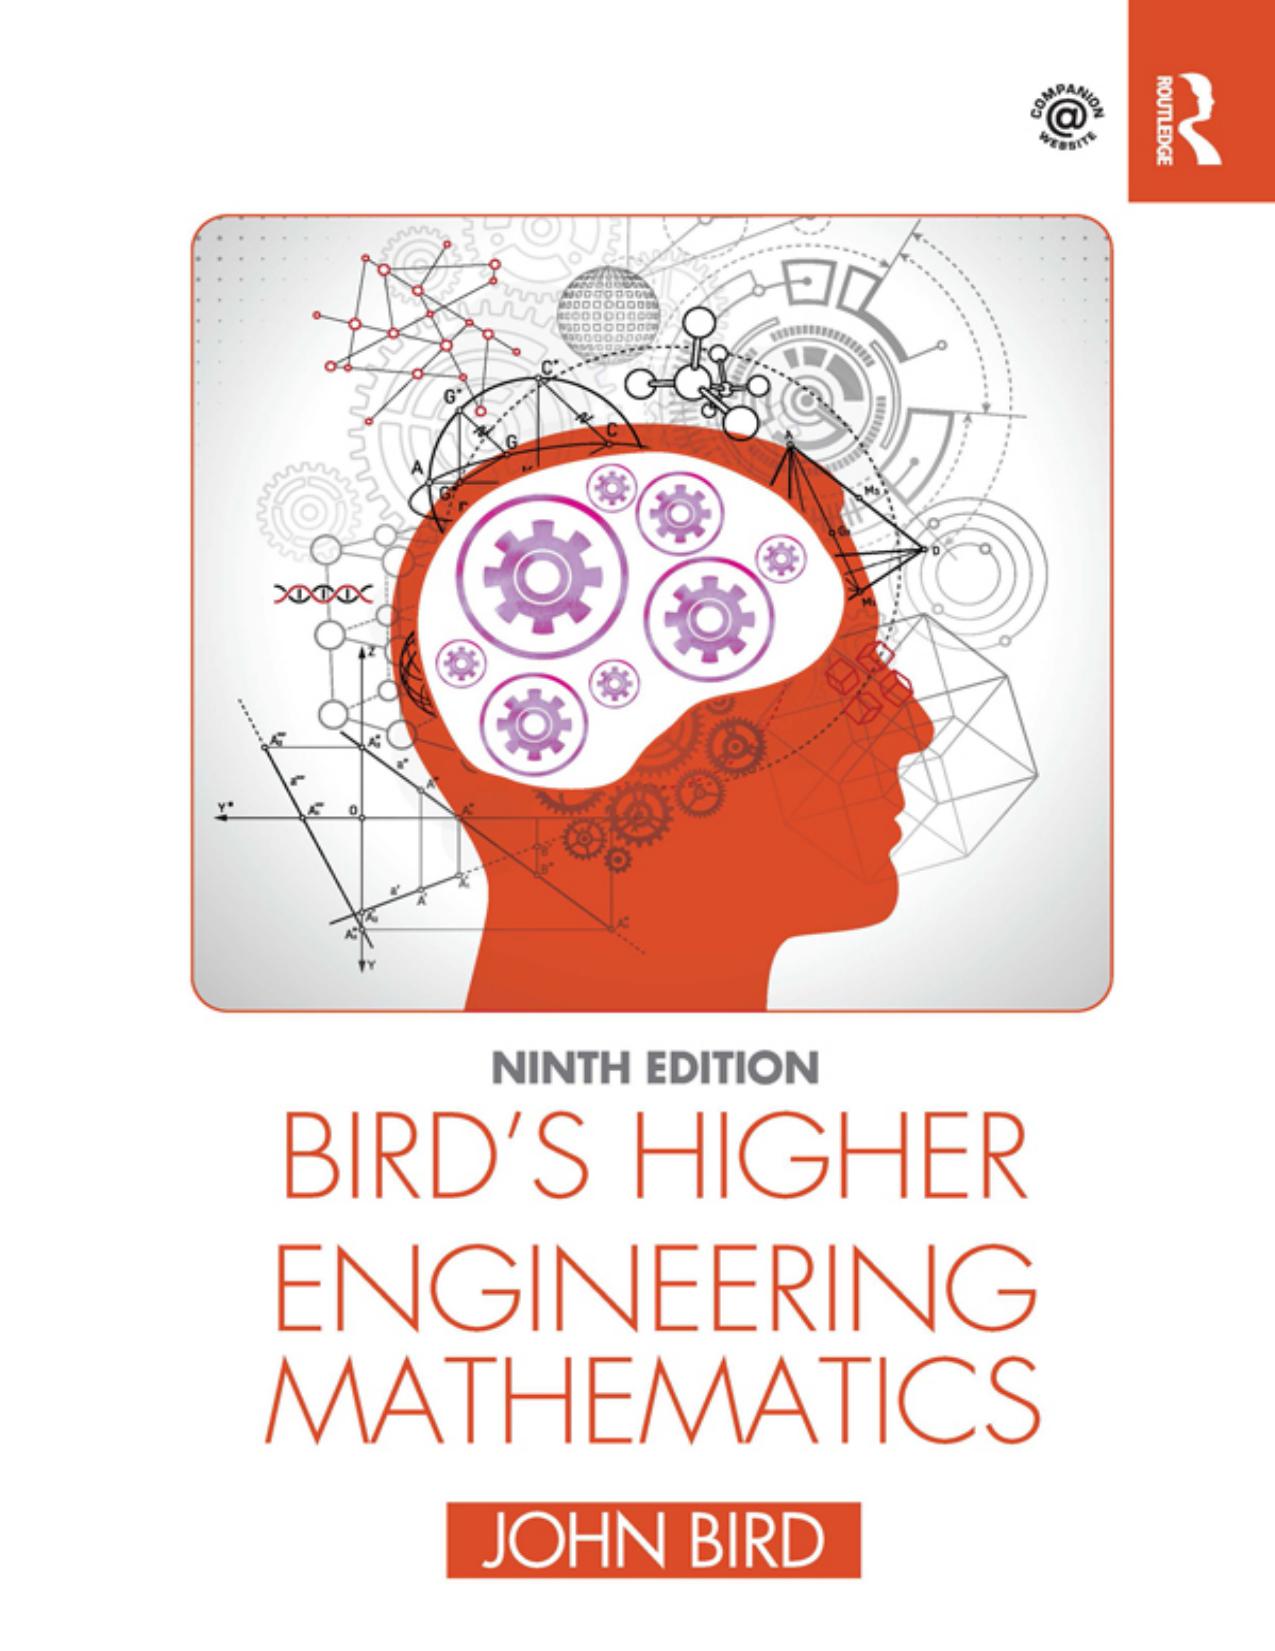 Bird's Higher Engineering Mathematics by John Bird